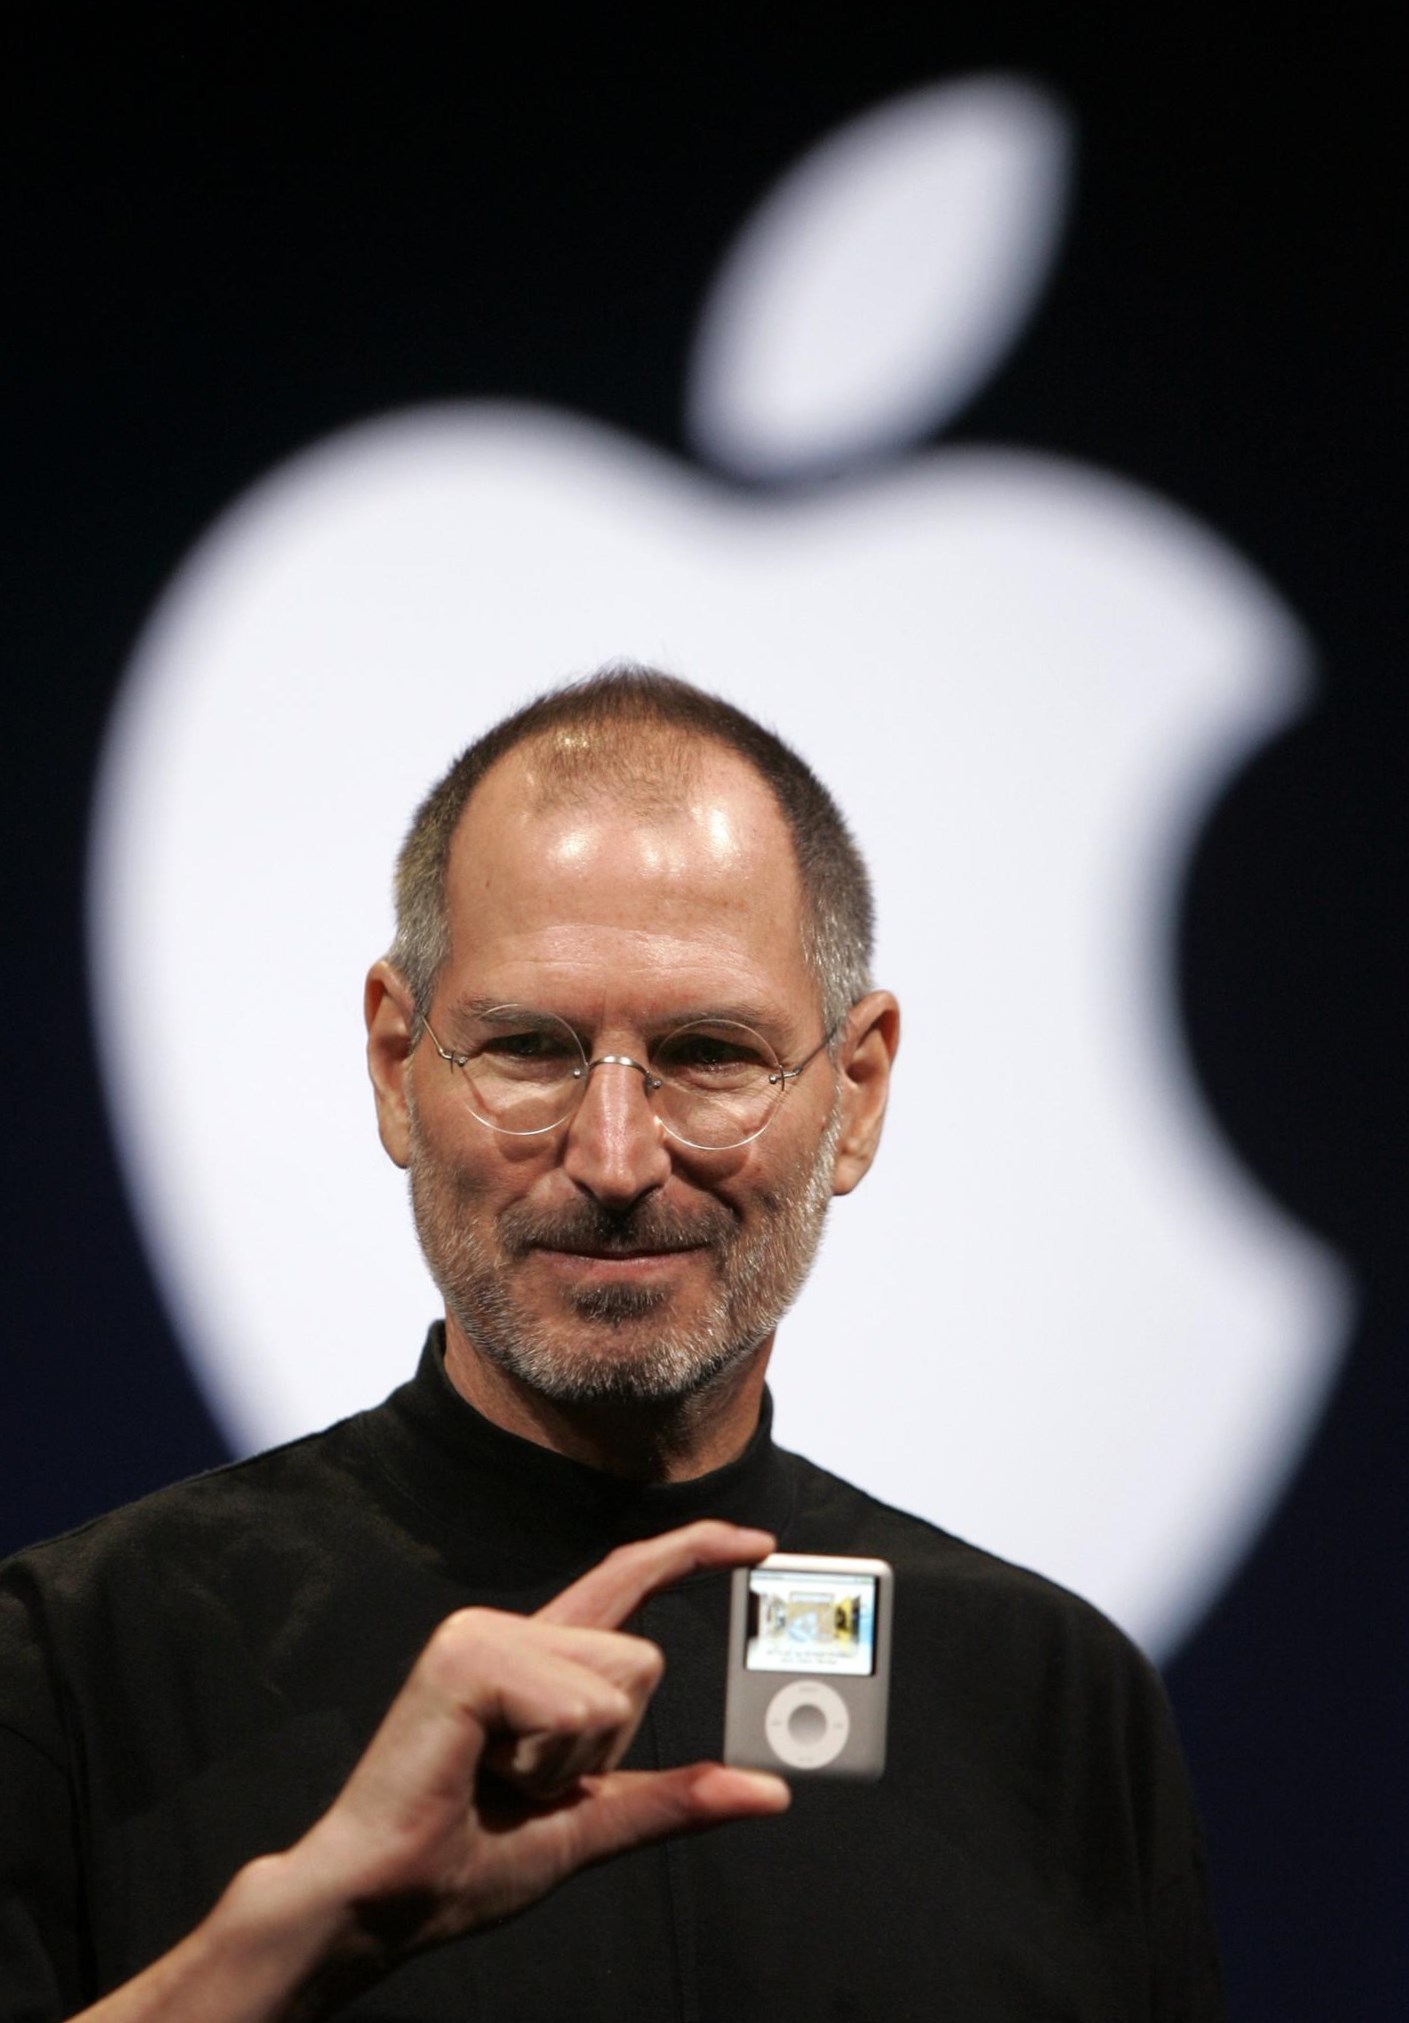 Steve Jobs' 10 best Quotes - Inspiring